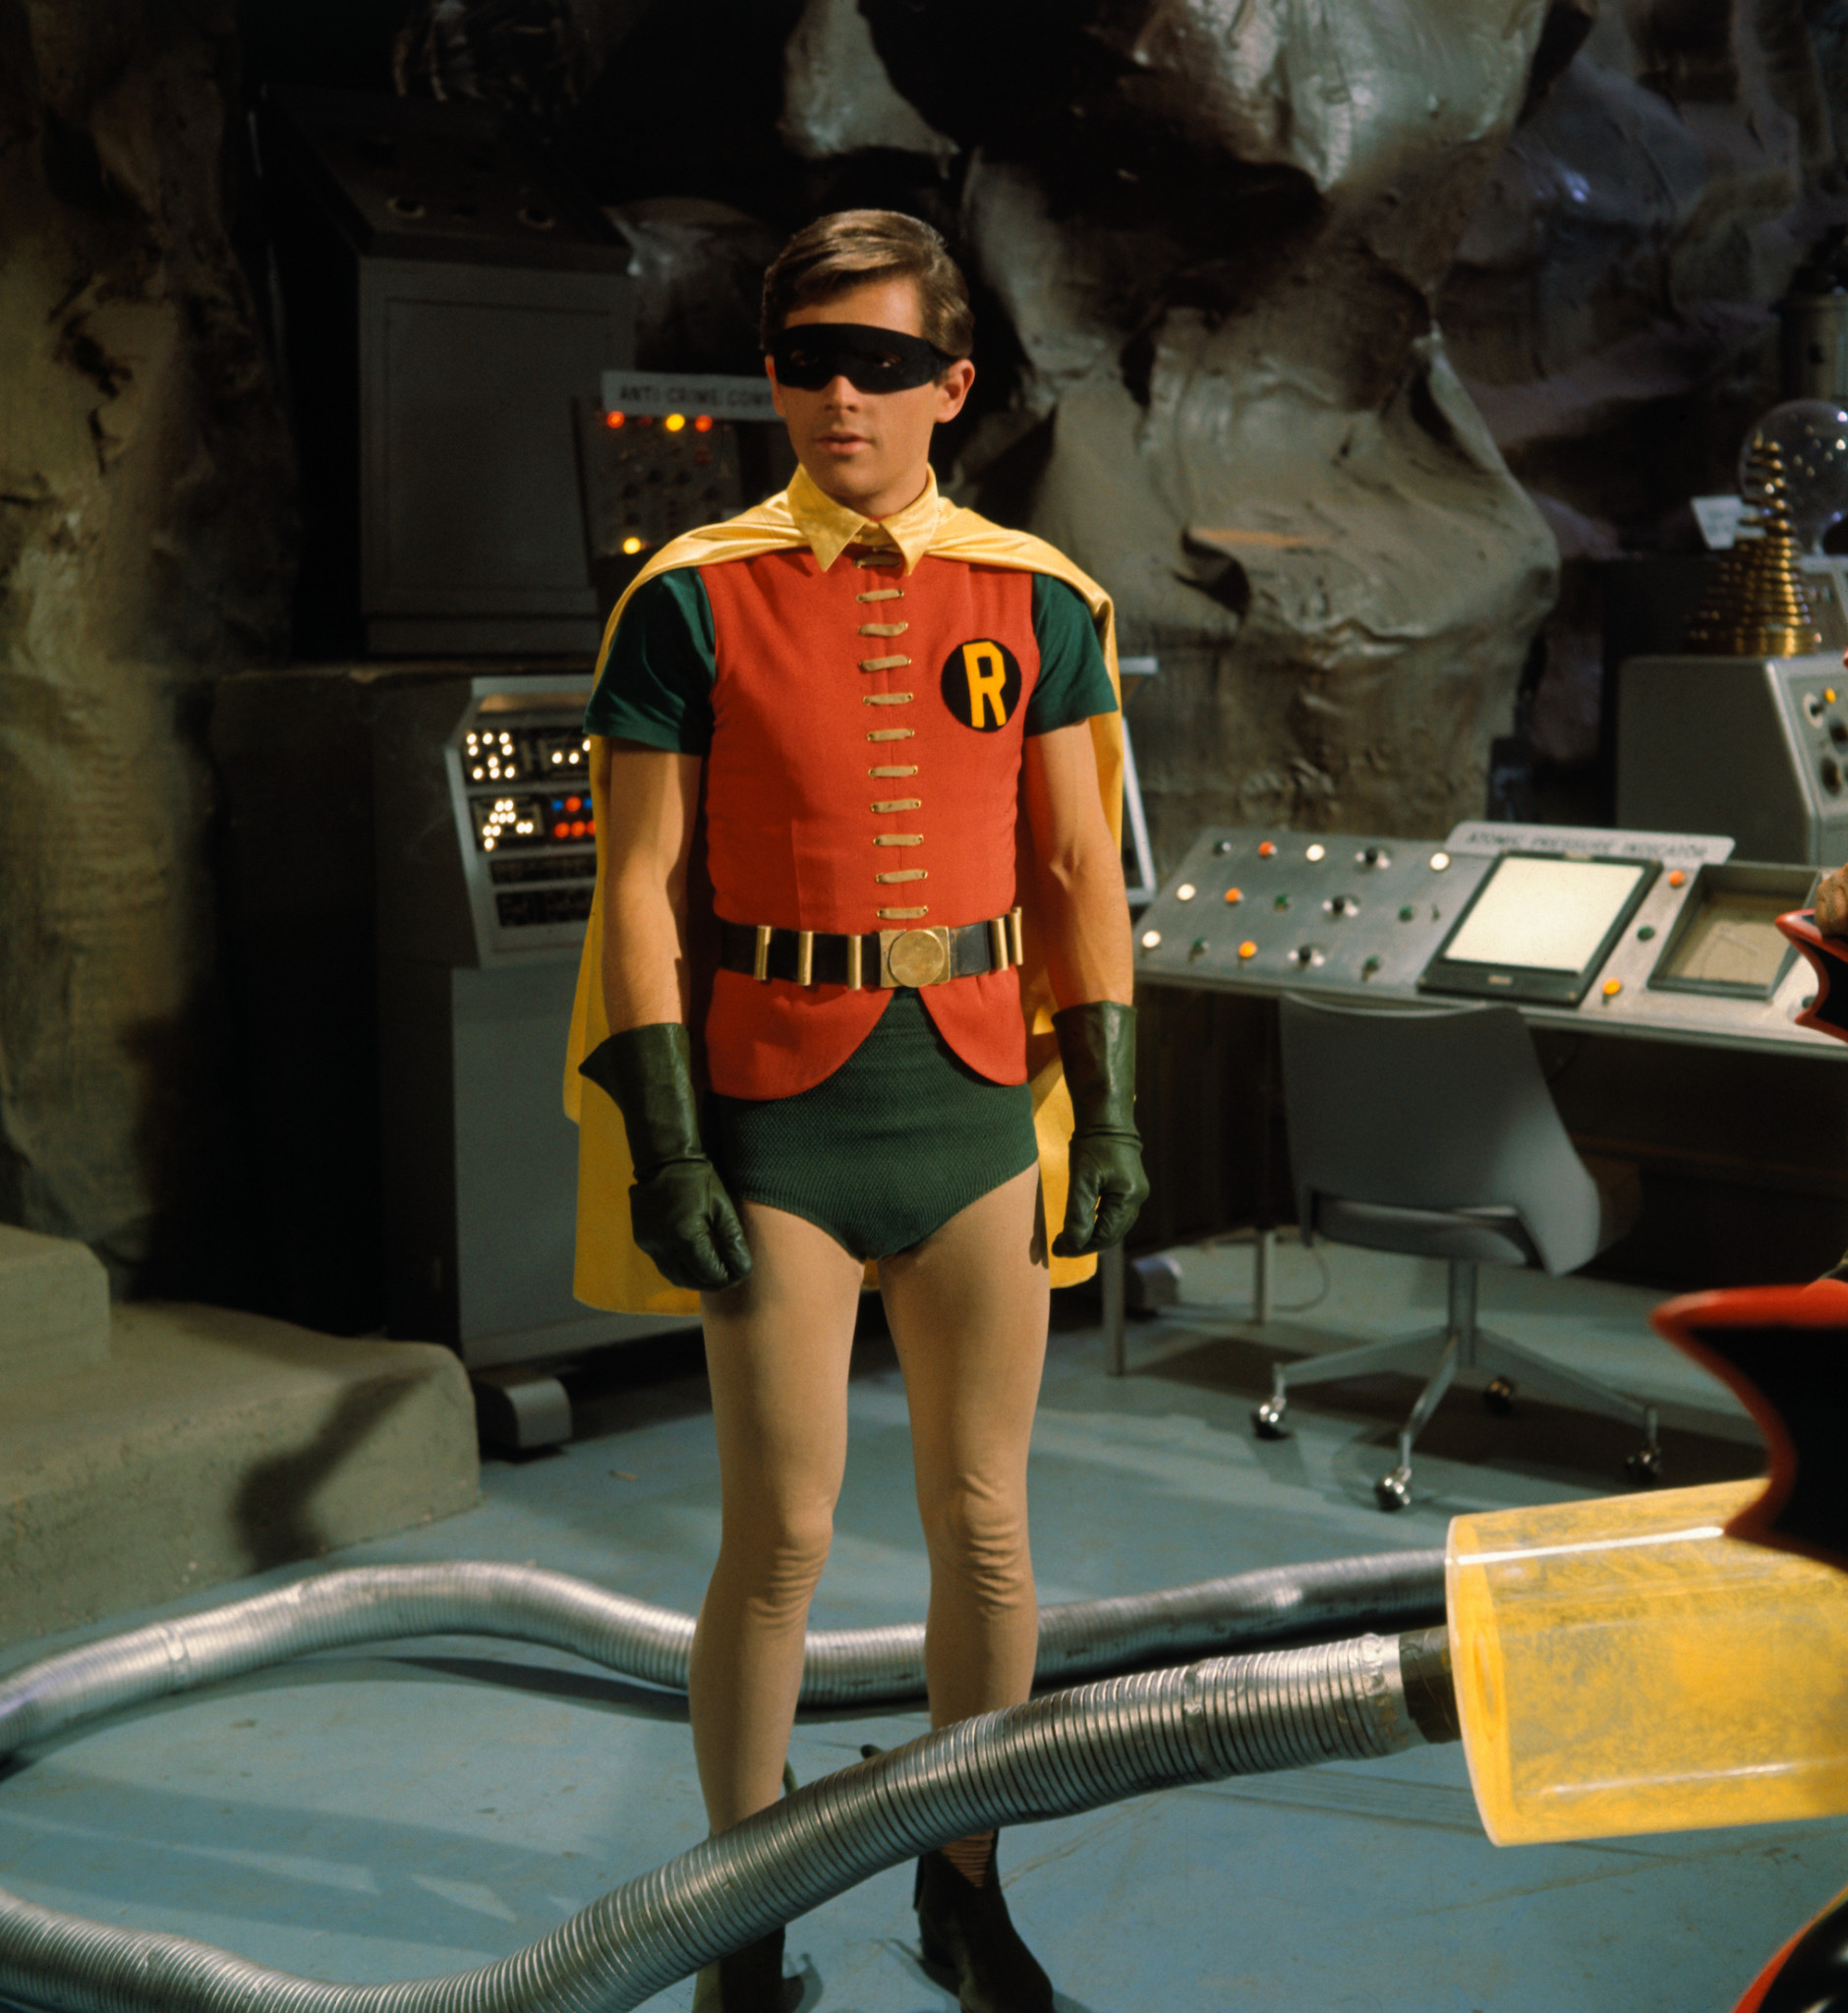 Arrowverse Crossover Adds Burt Ward, Original Robin From '60s 'Batman'